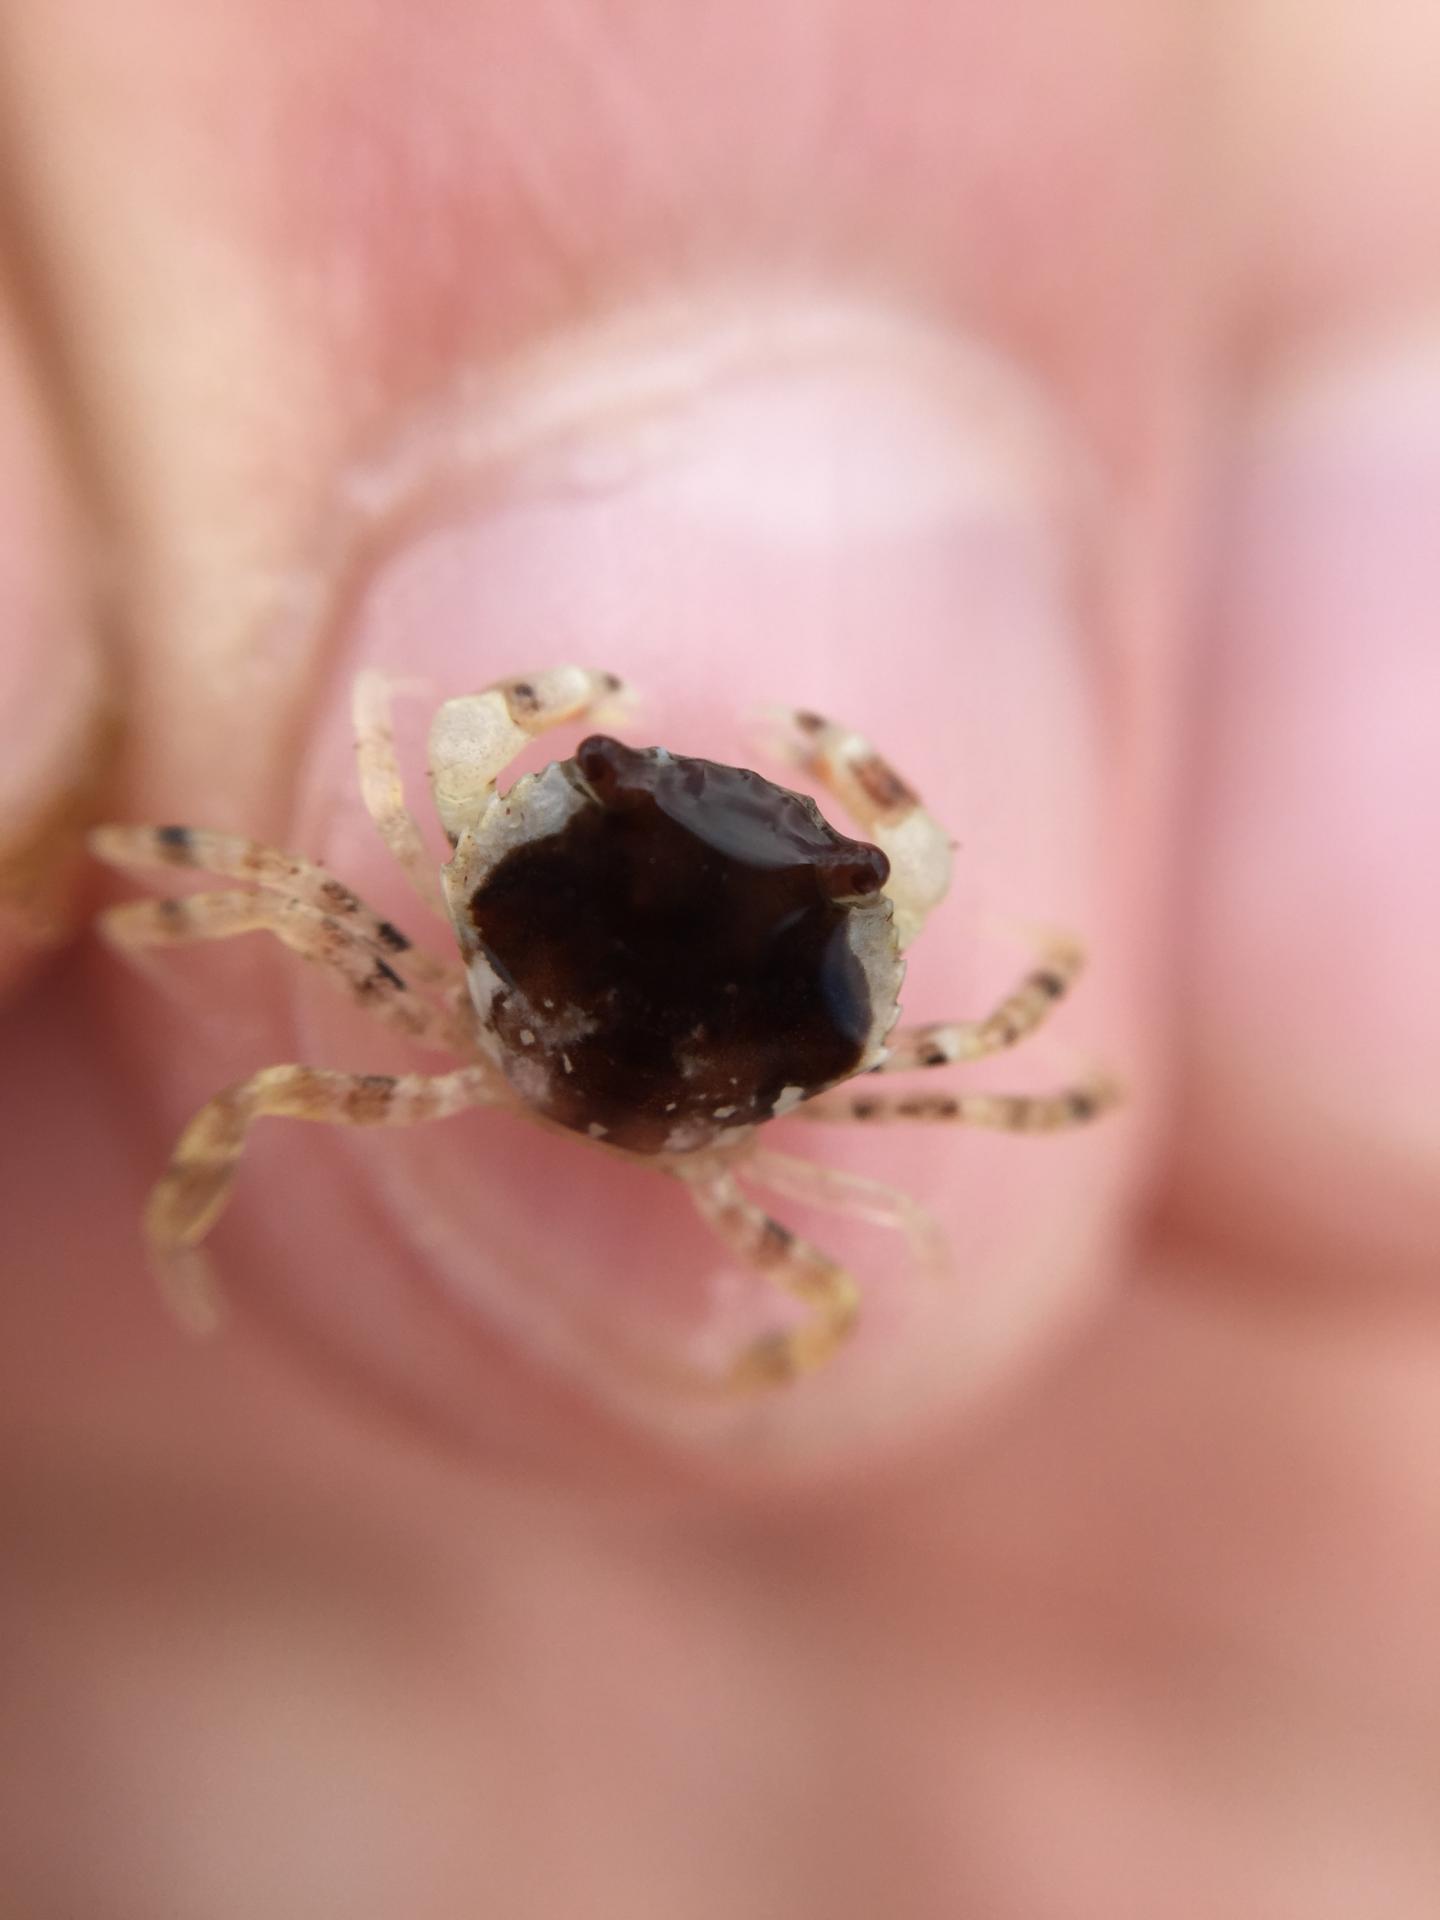 Juvenile Shore Crab on Finger